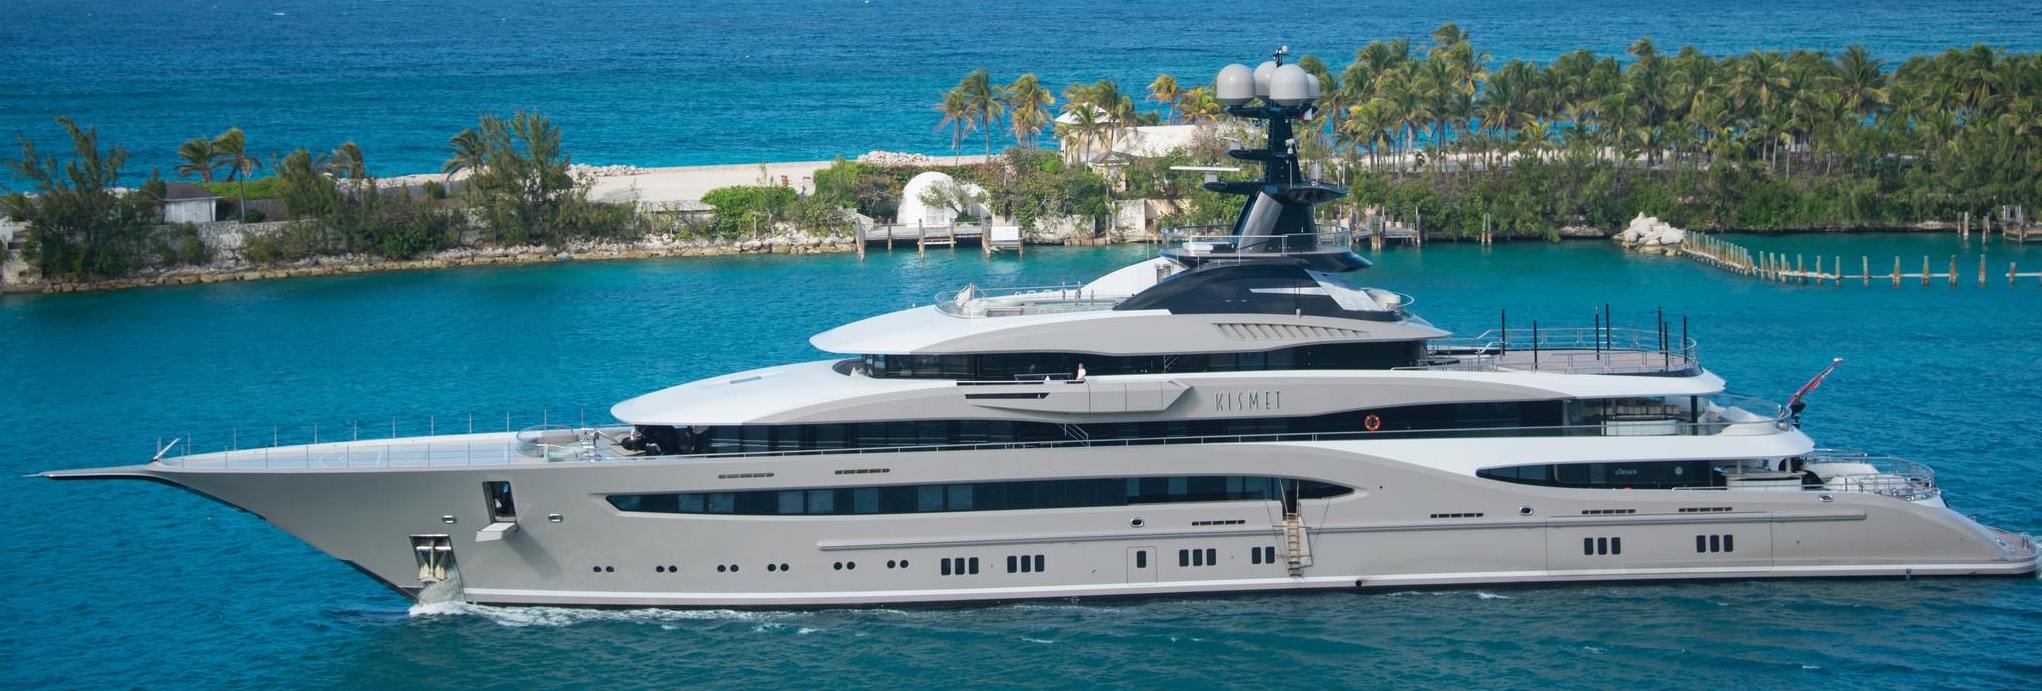 Superyacht Monaco Wonders of Luxury